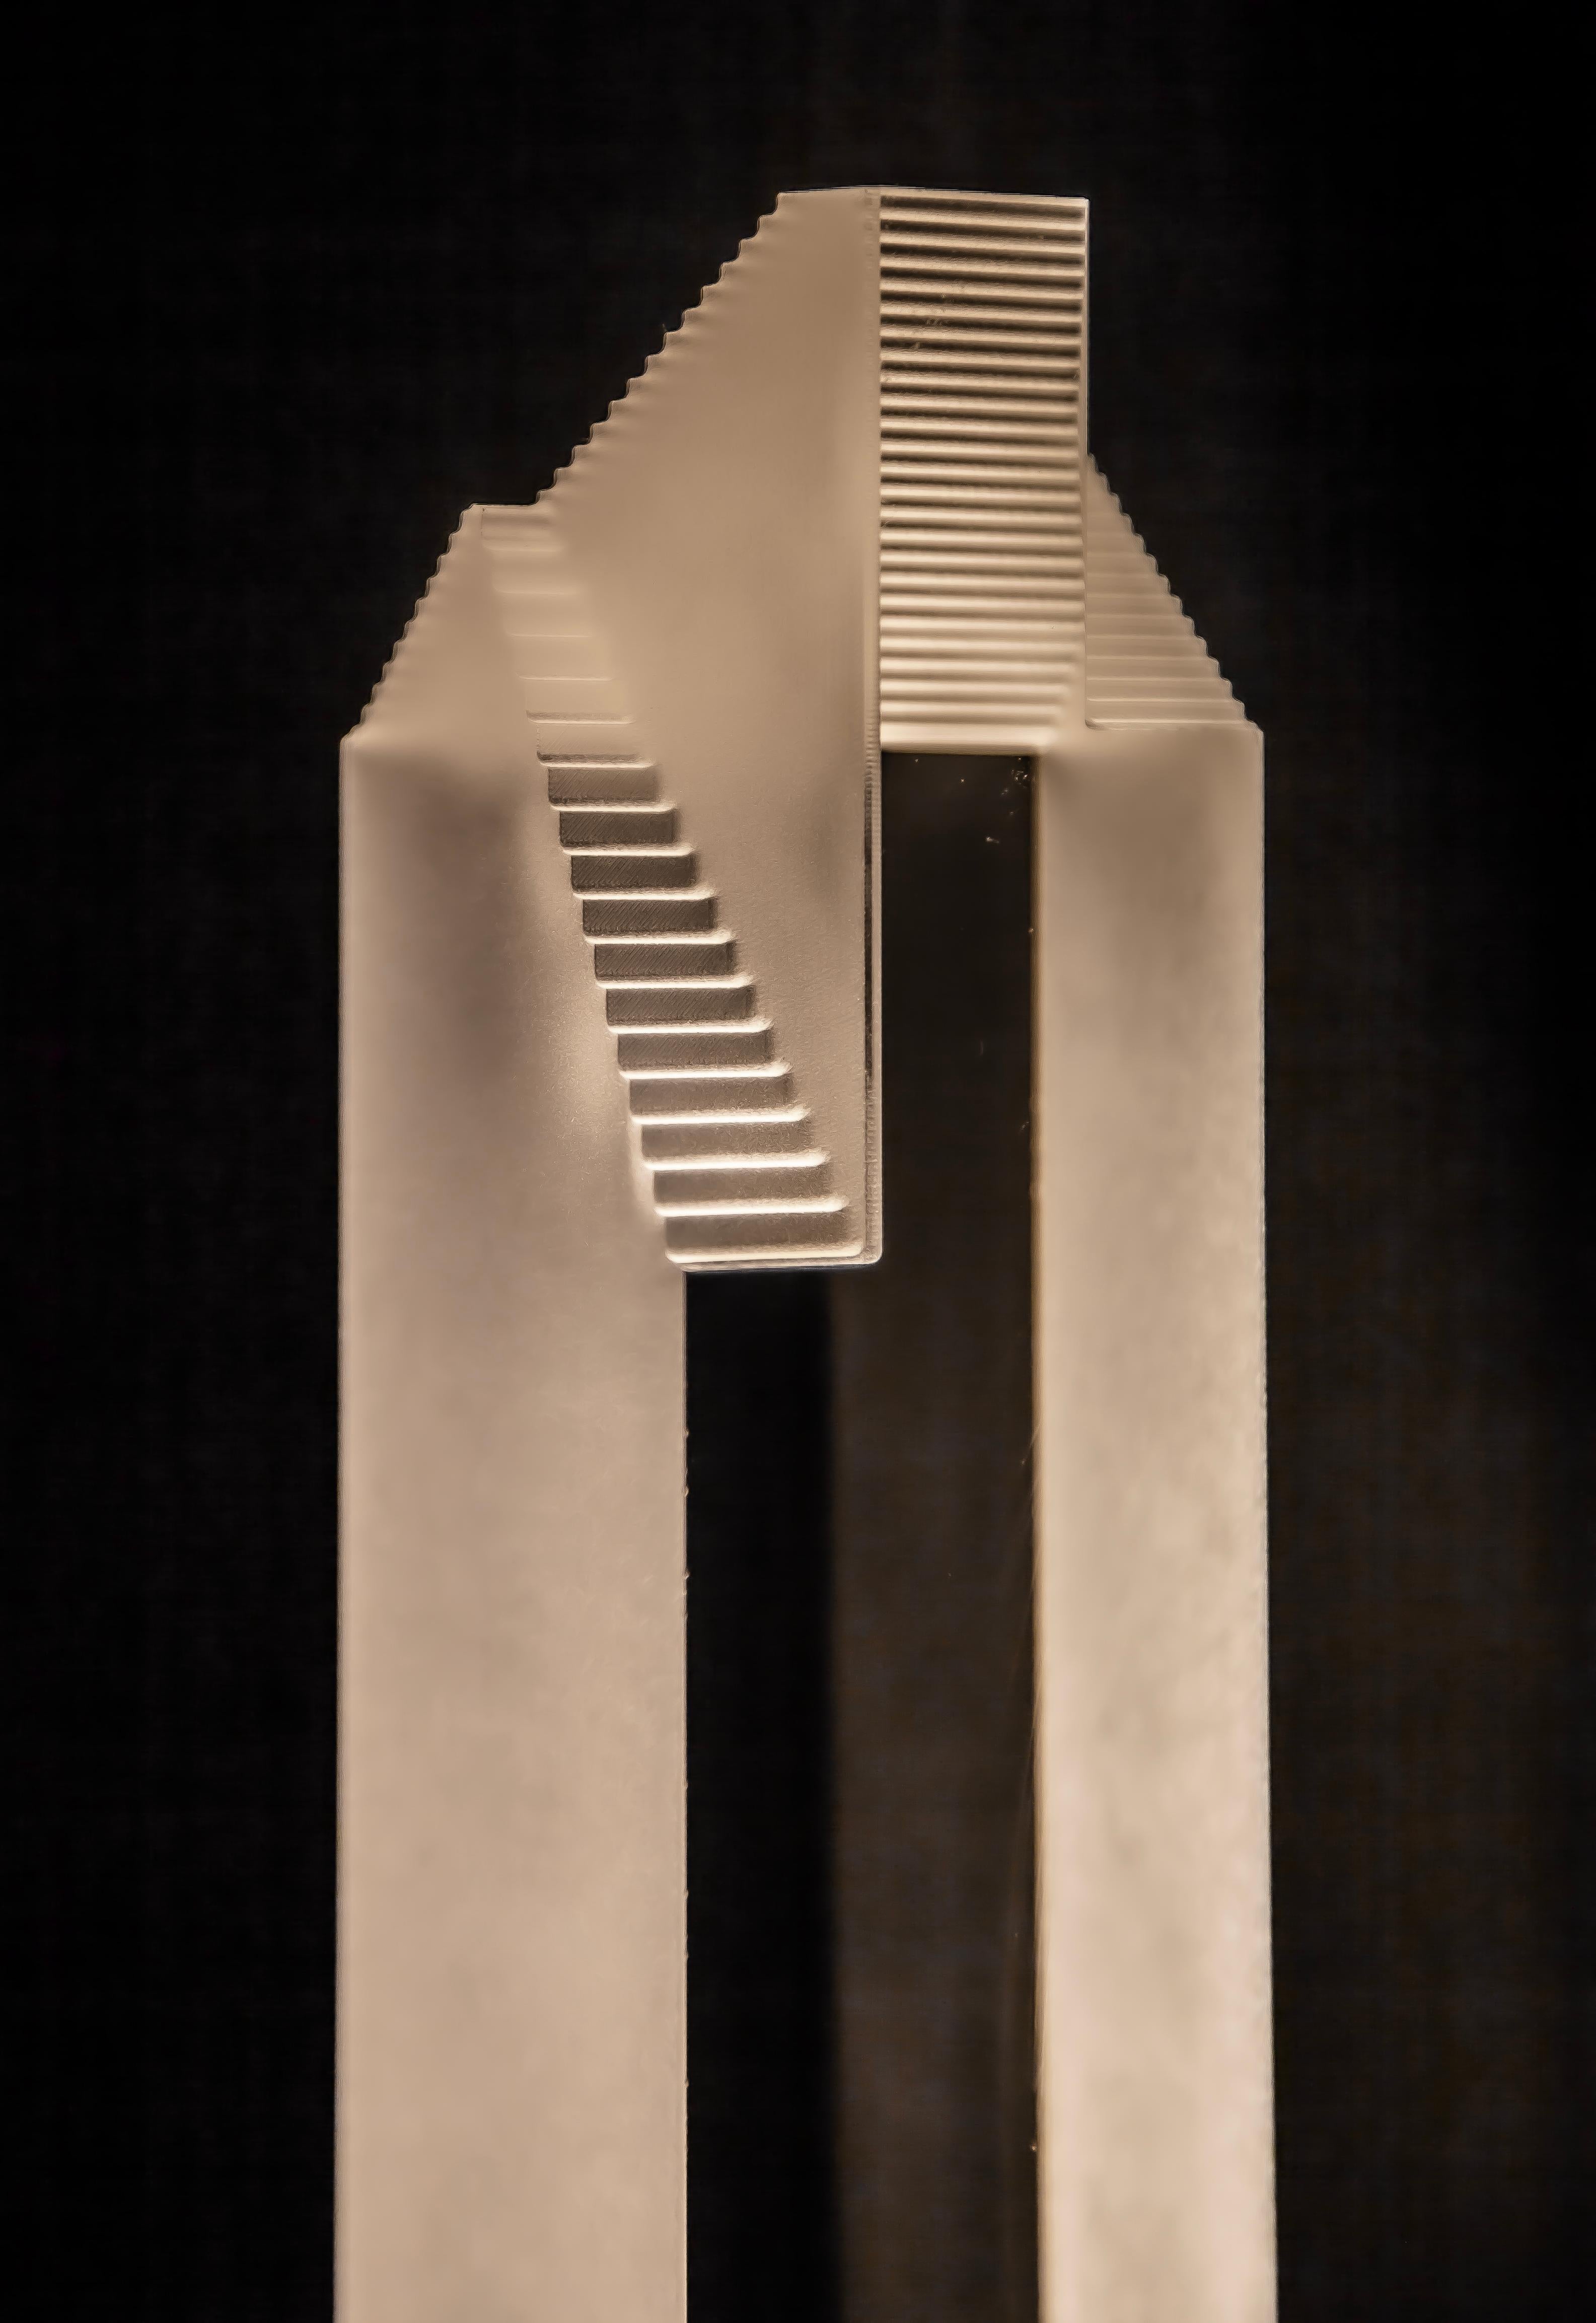 The converging Obelisk II light sculpture 24